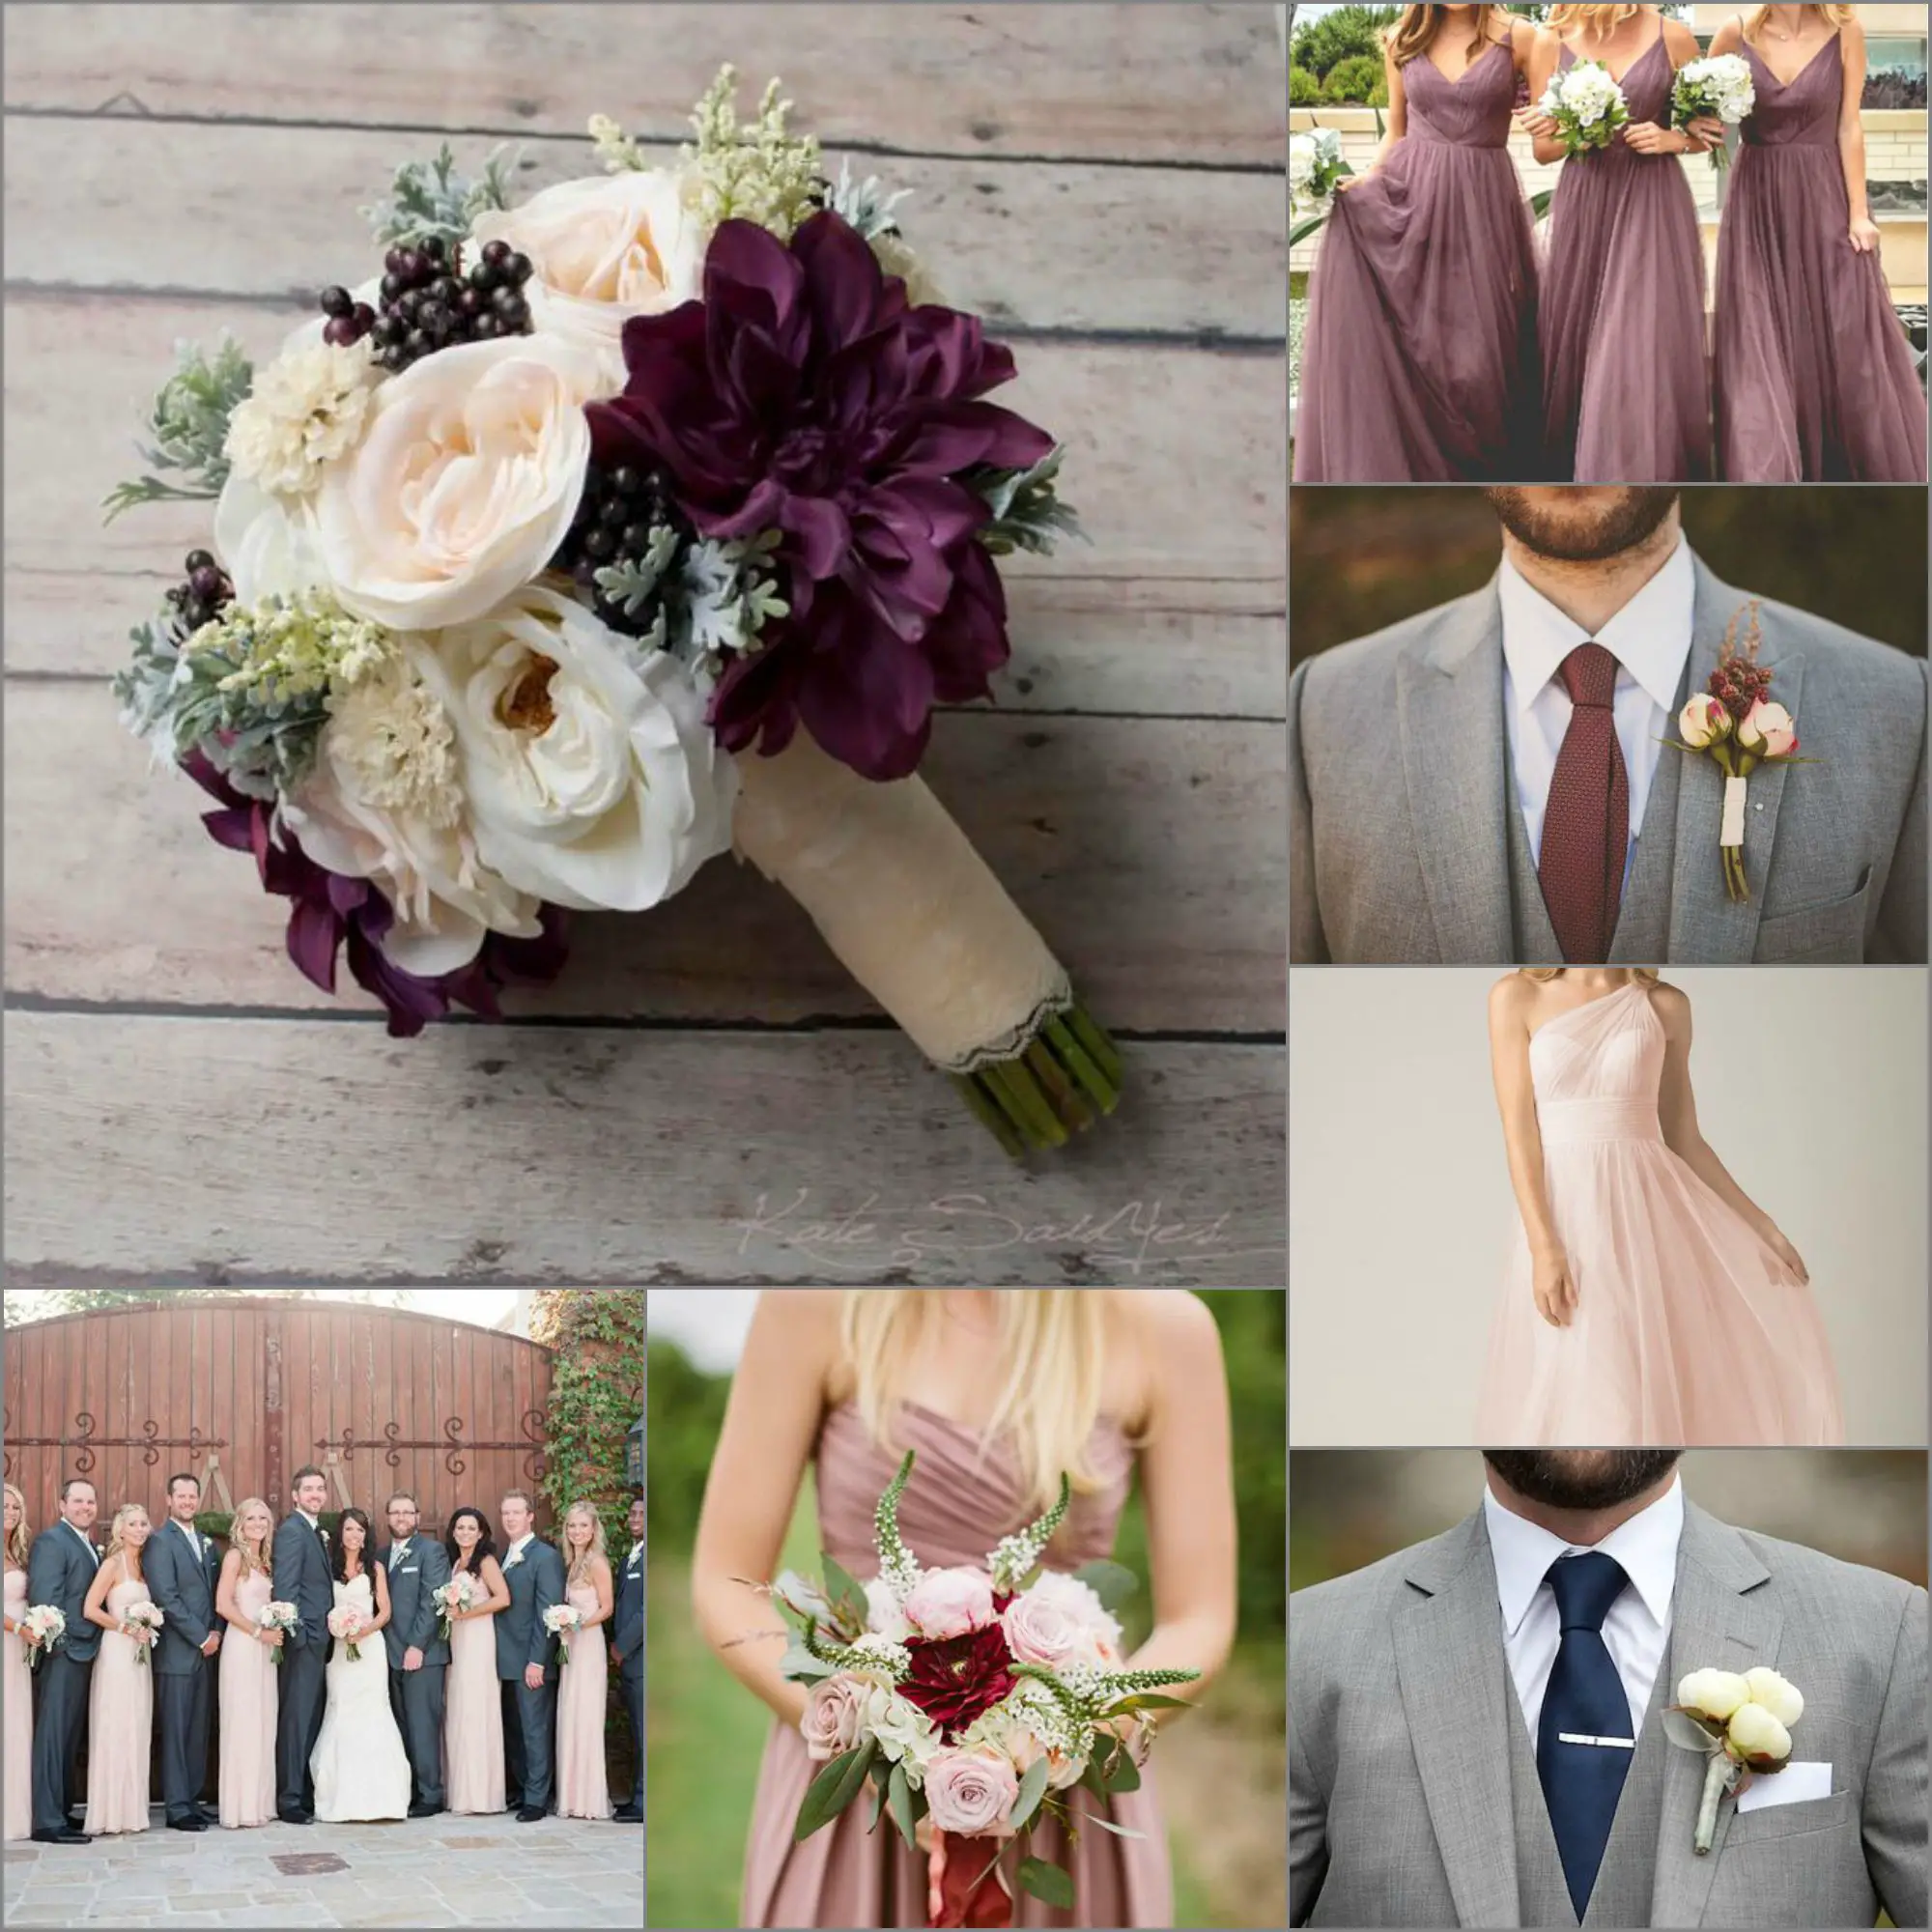 Dusty pink, mauve, grey, plum, and navy blue wedding